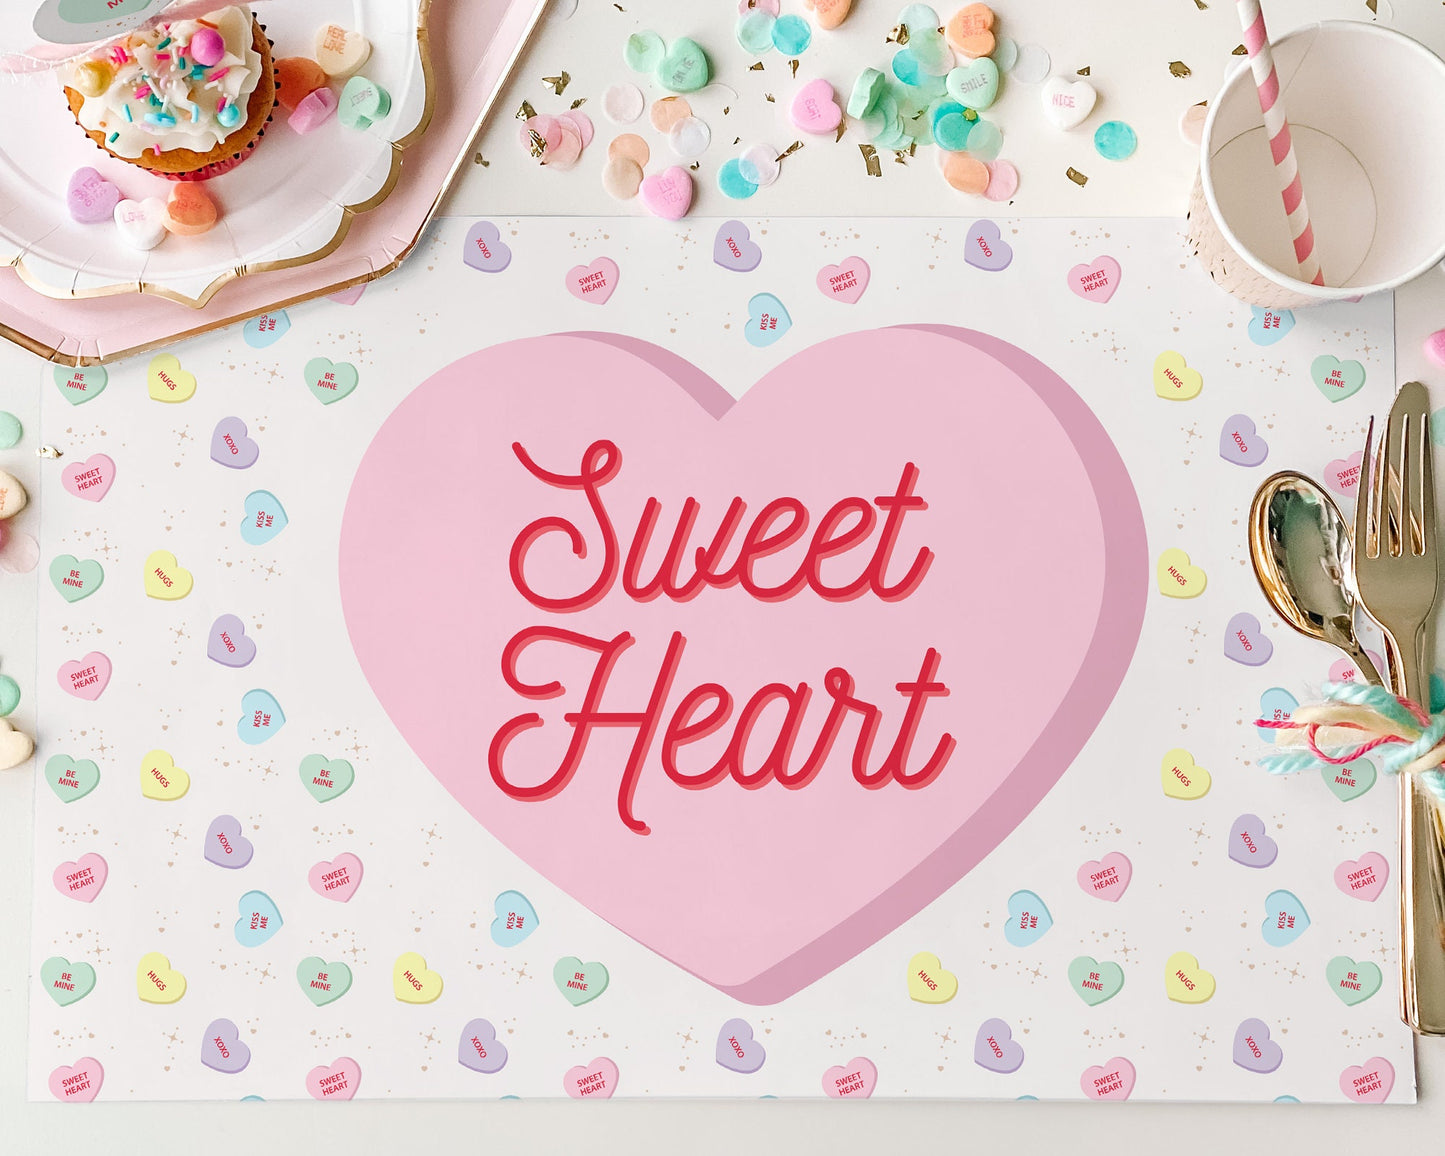 Conversation Hearts Valentine's Day Coloring Placemat || Valentine Coloring Page || Printable Placemat || Kids Valentine Activity || VD03